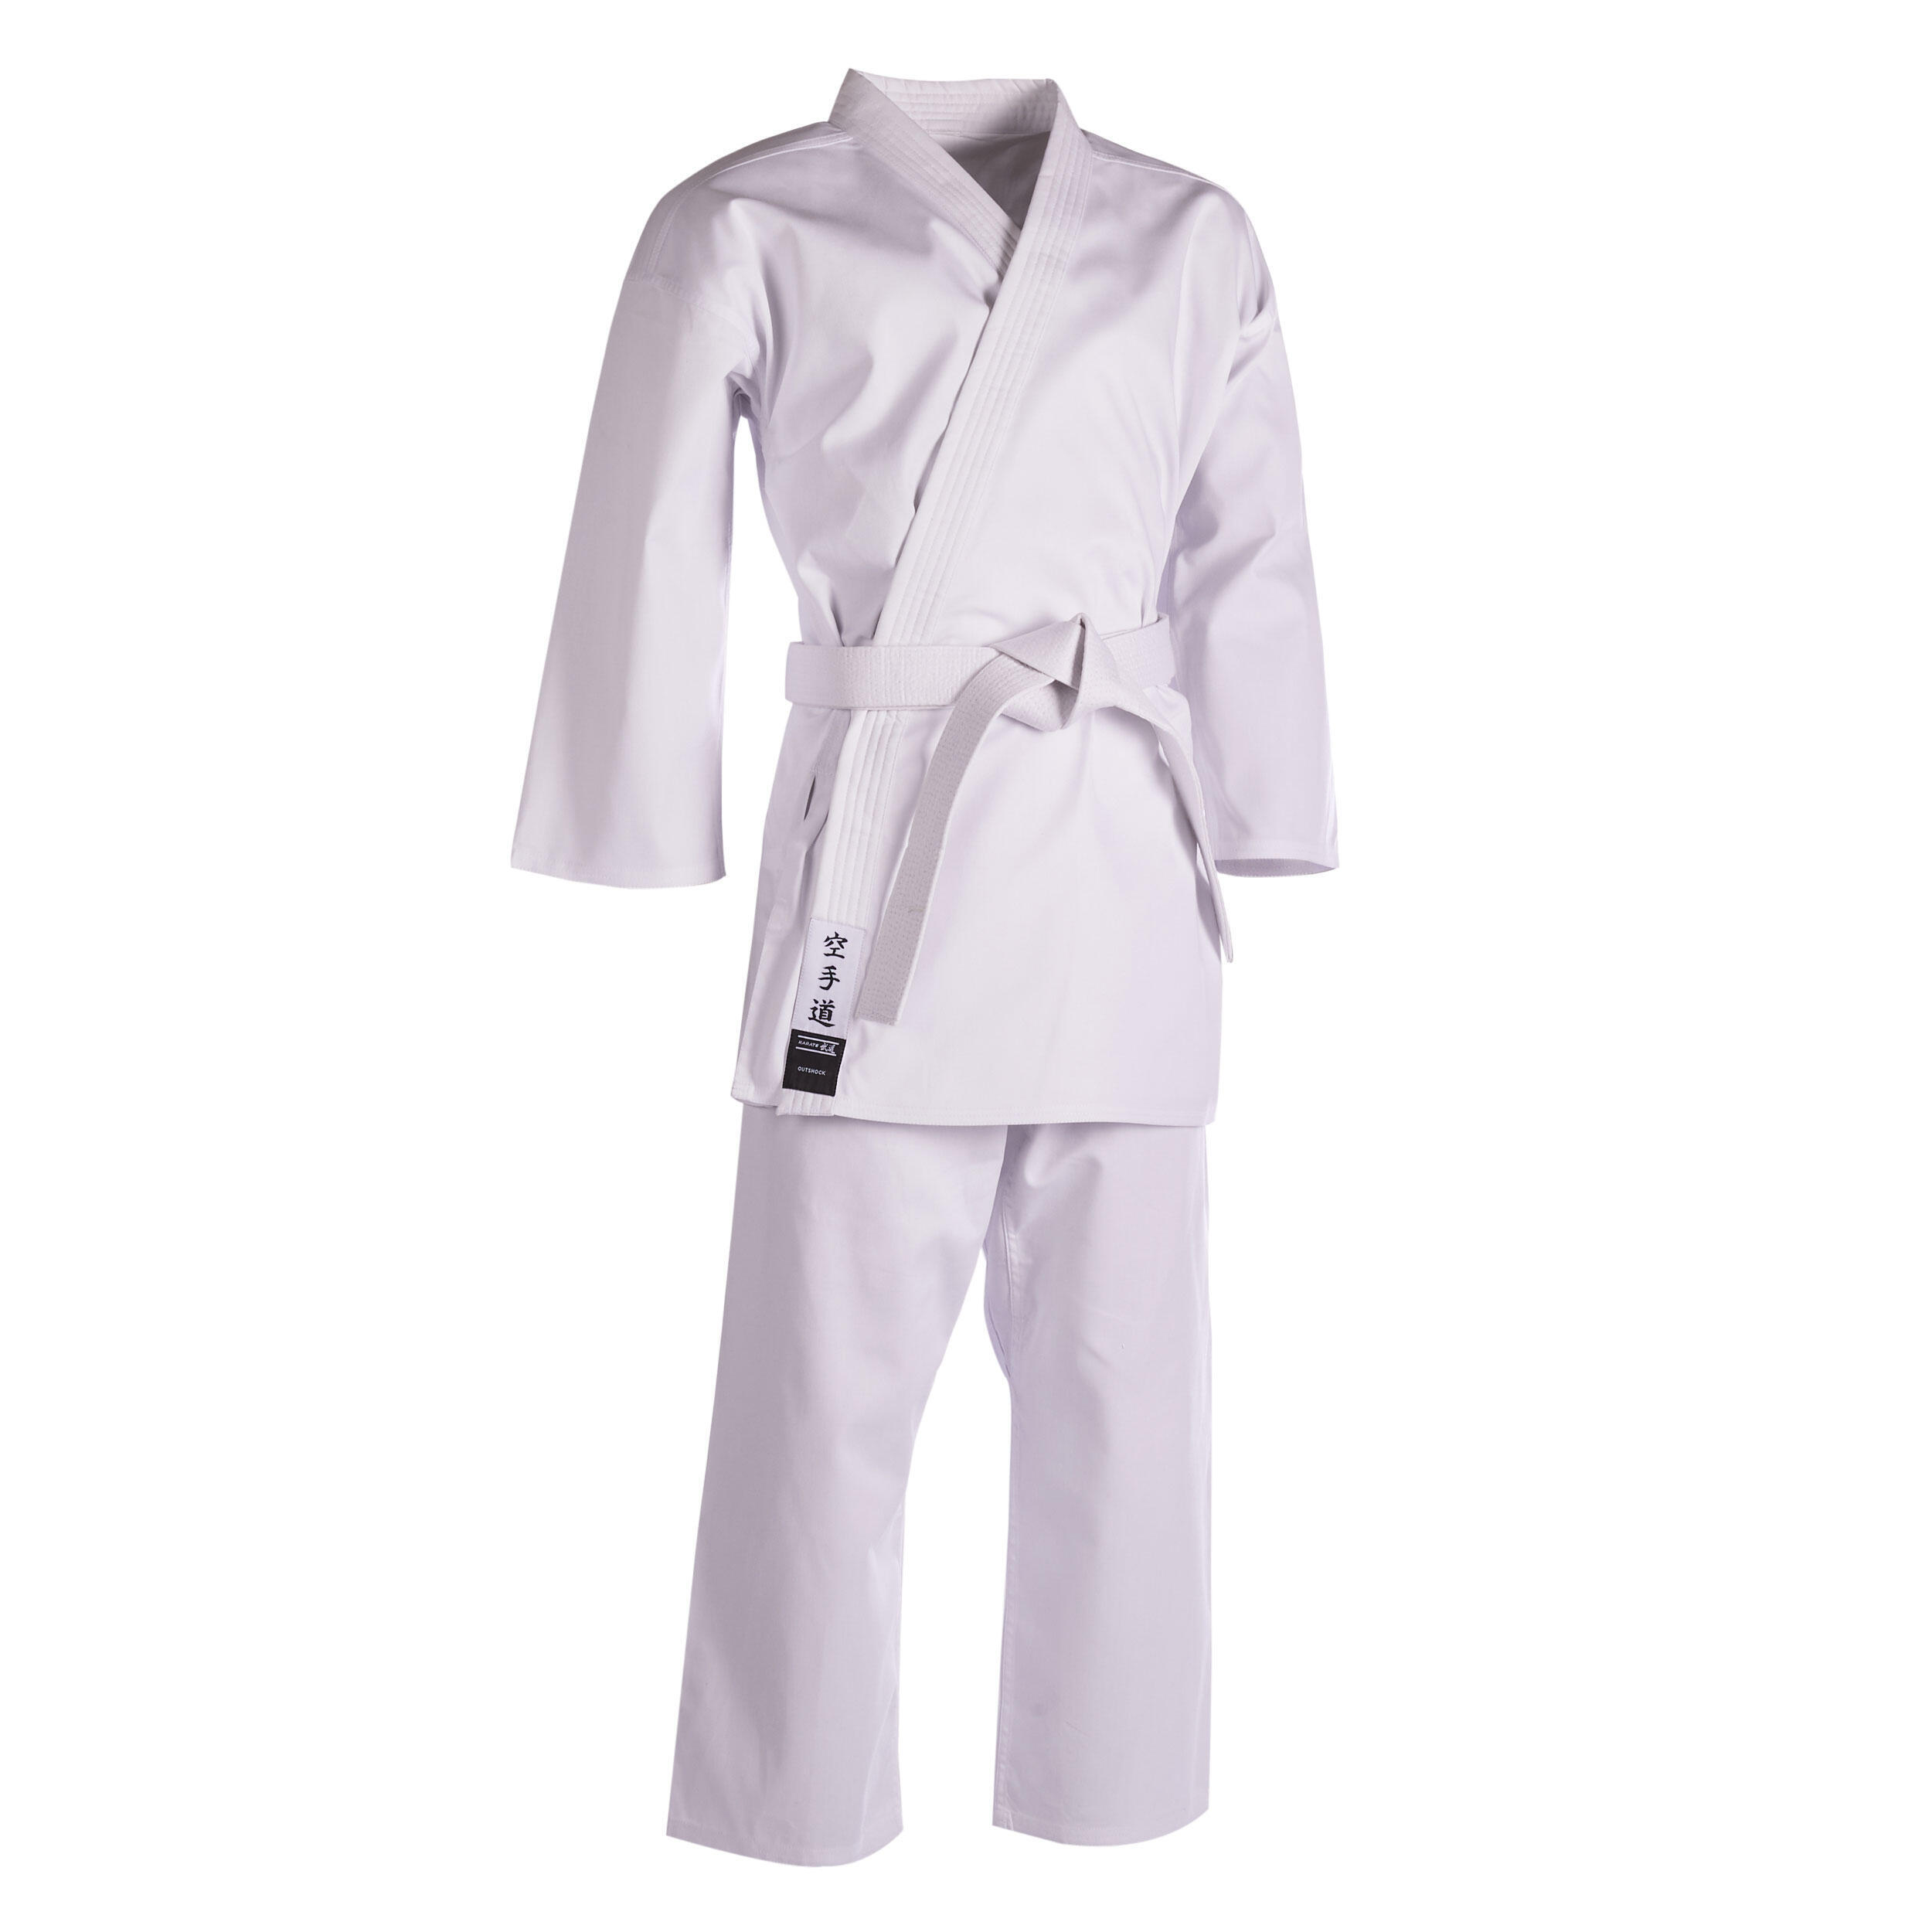 Refurbished 100 Adult Karate Uniform - B Grade 1/7